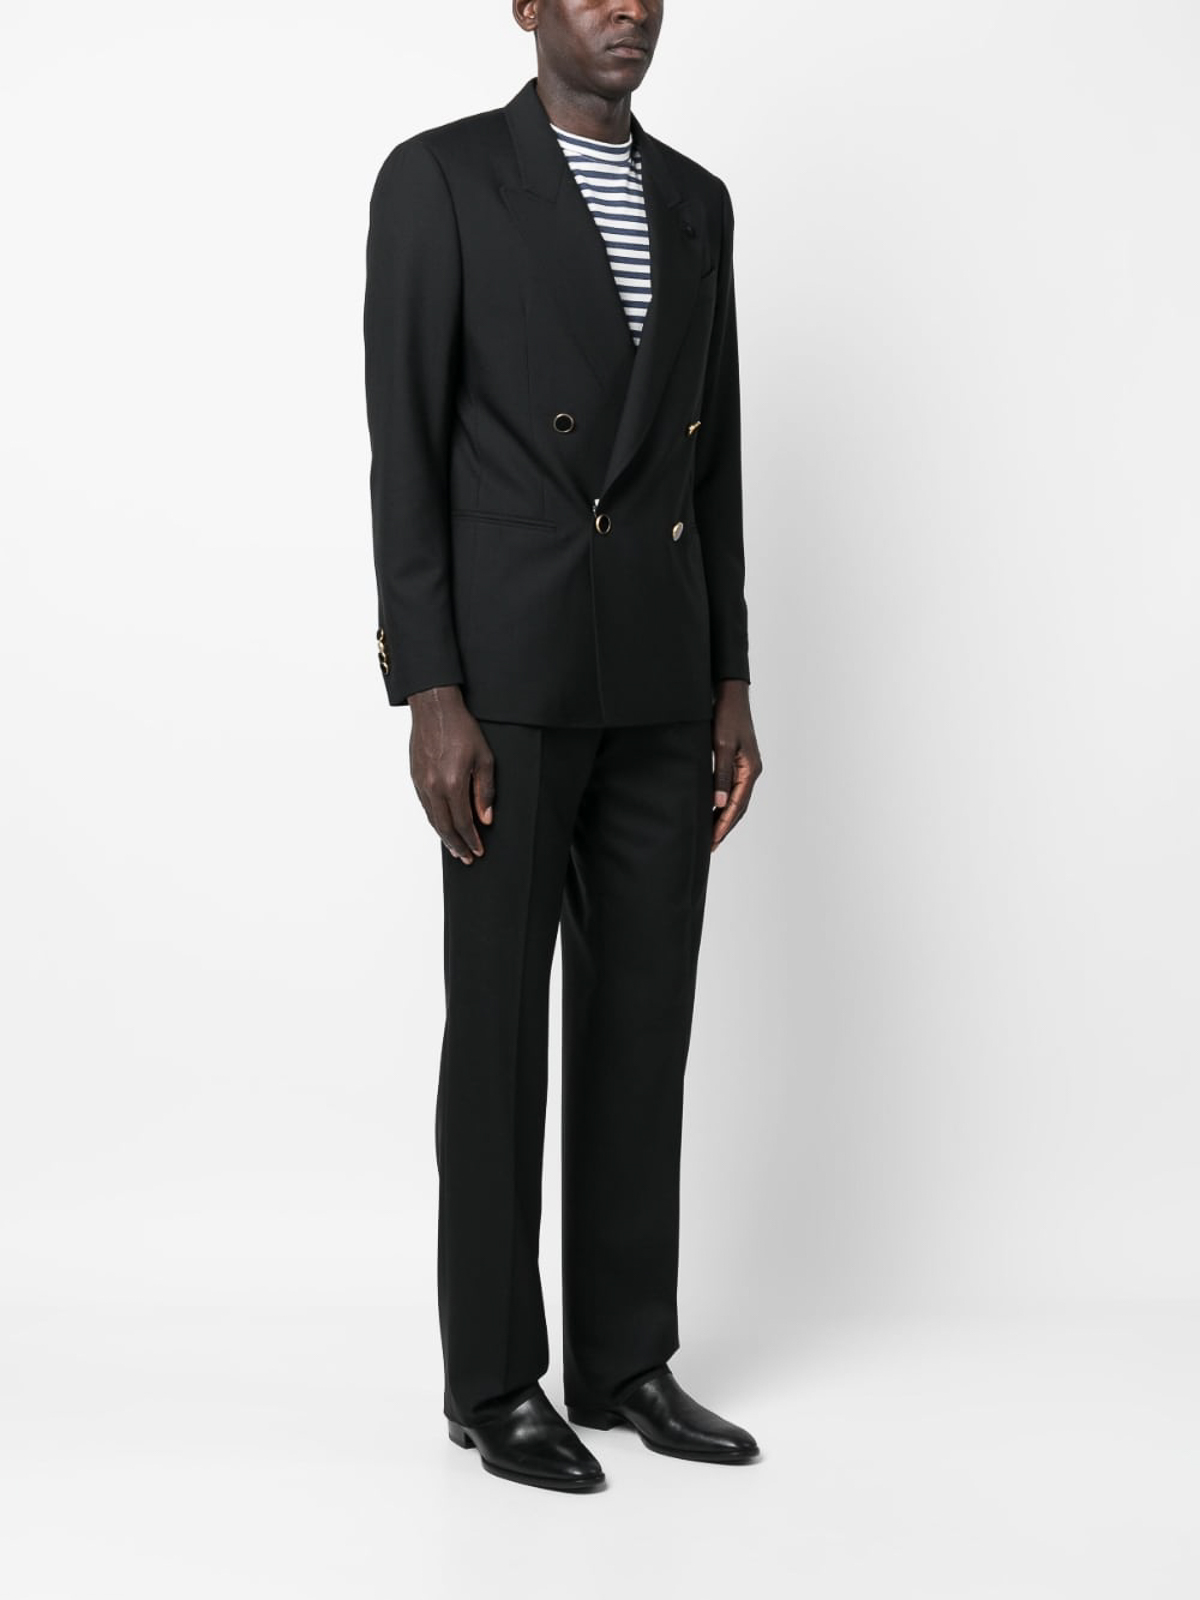 Louis Vuitton  Double breasted suit, Double breasted suit jacket, Suit  jacket